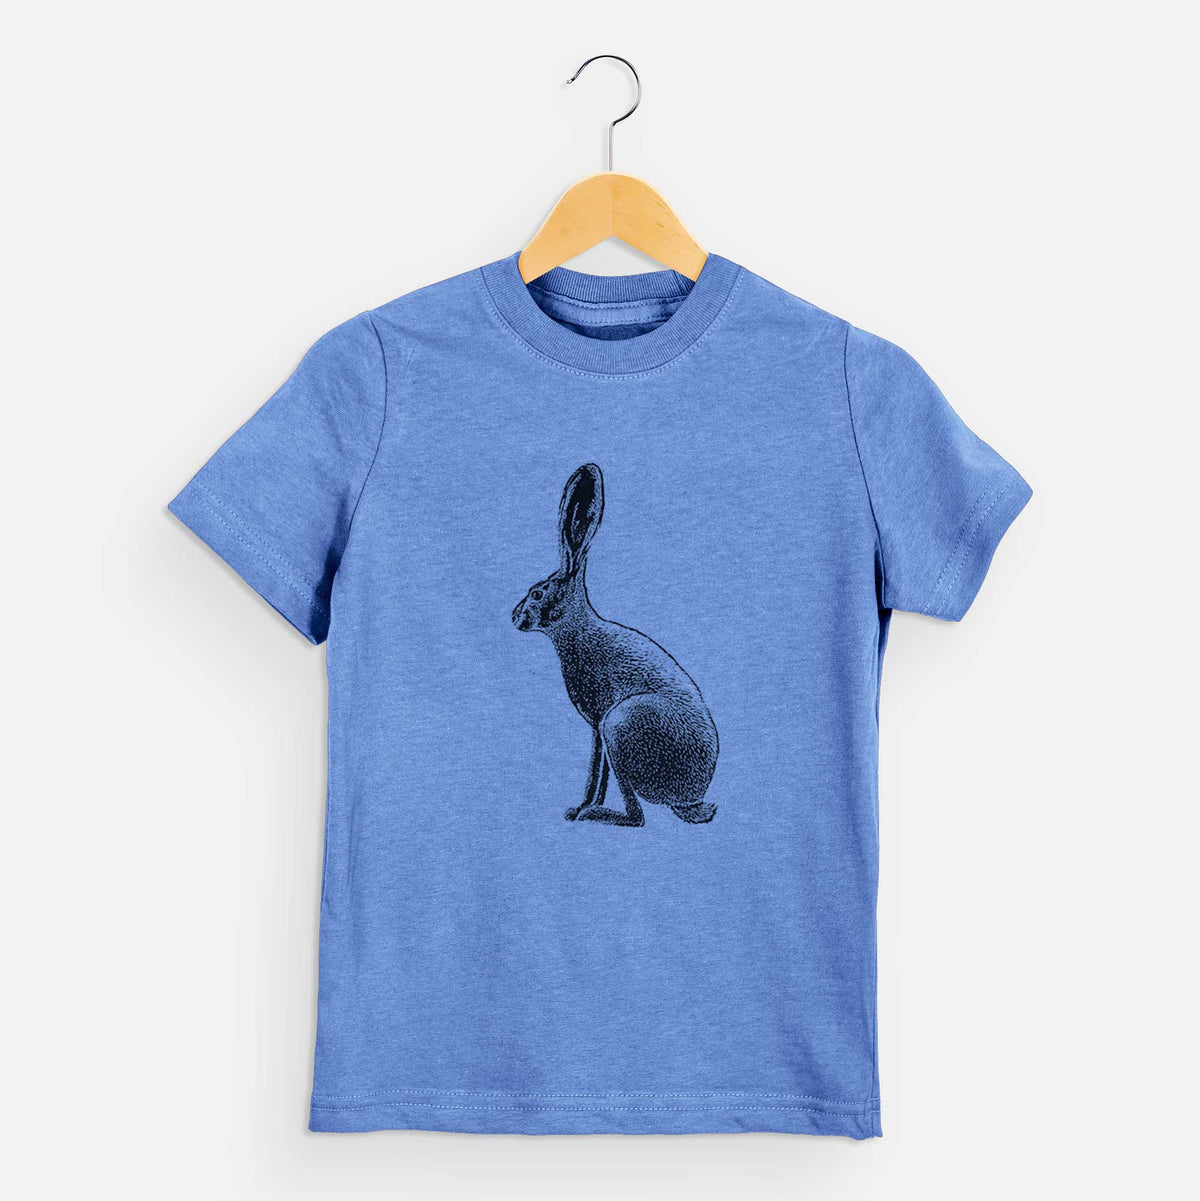 Wild California Hare - Black-tailed Jackrabbit - Kids Shirt